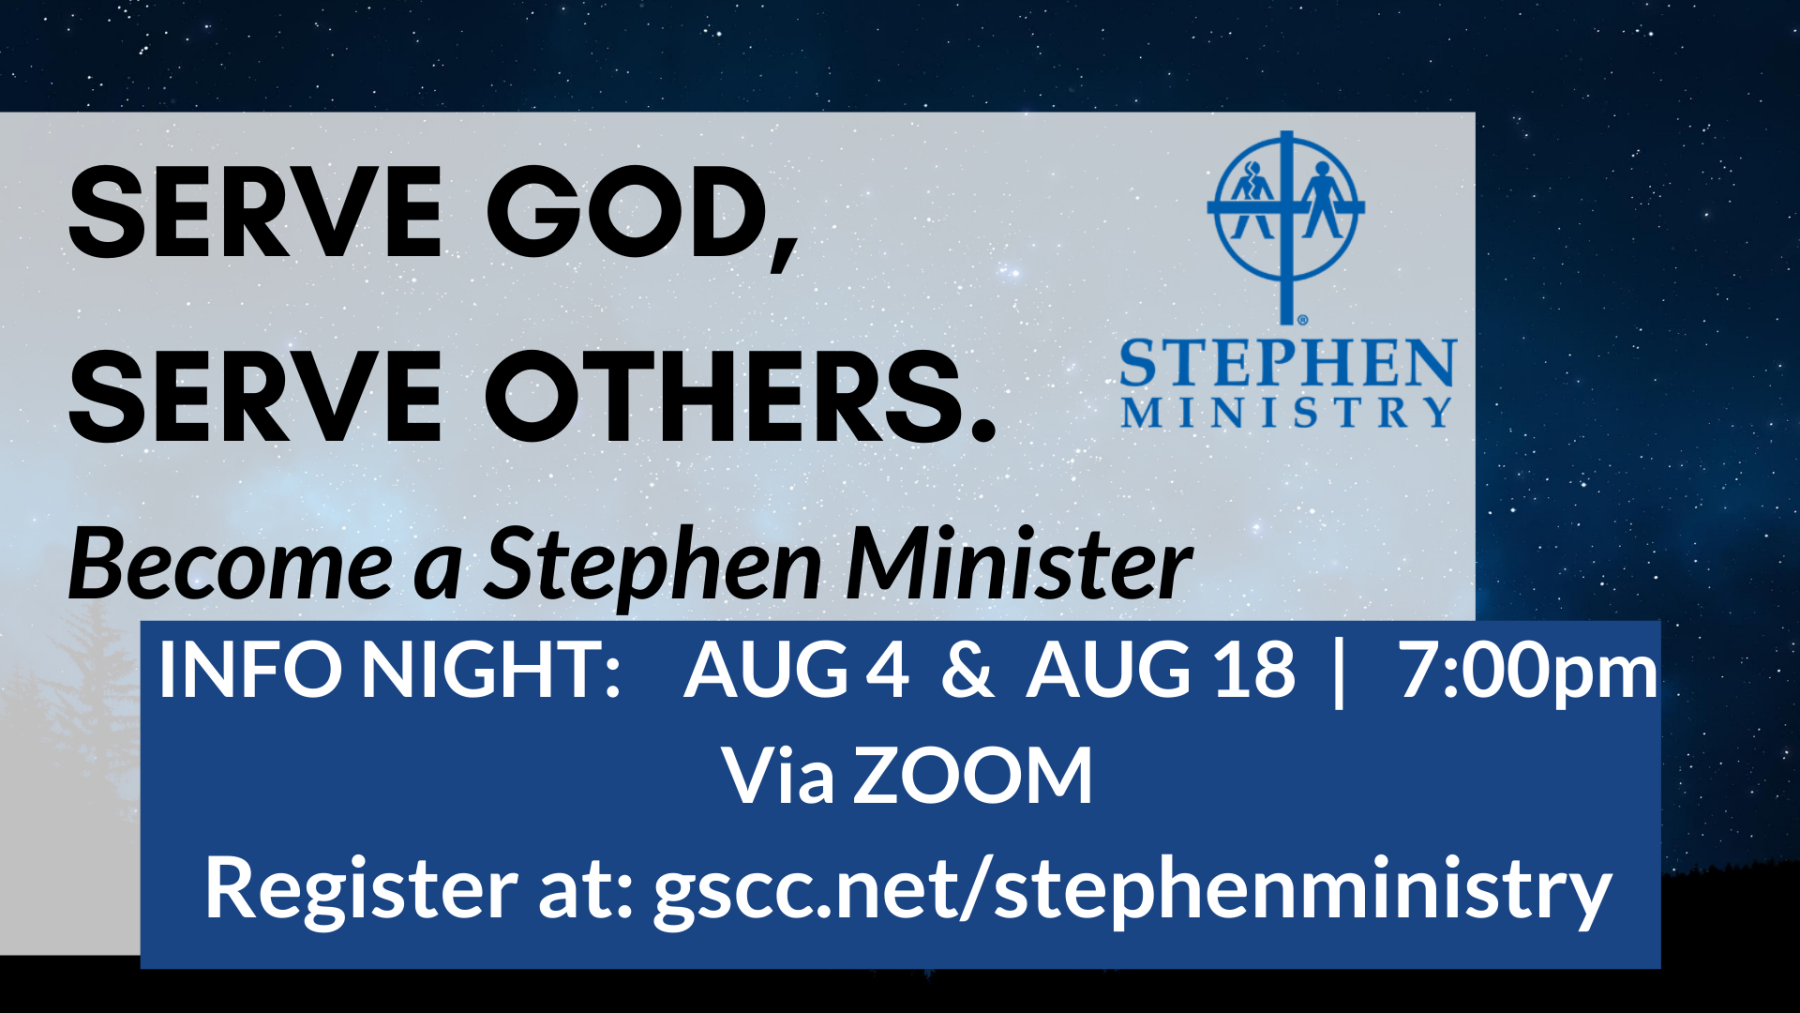 Stephen Ministry Information Night